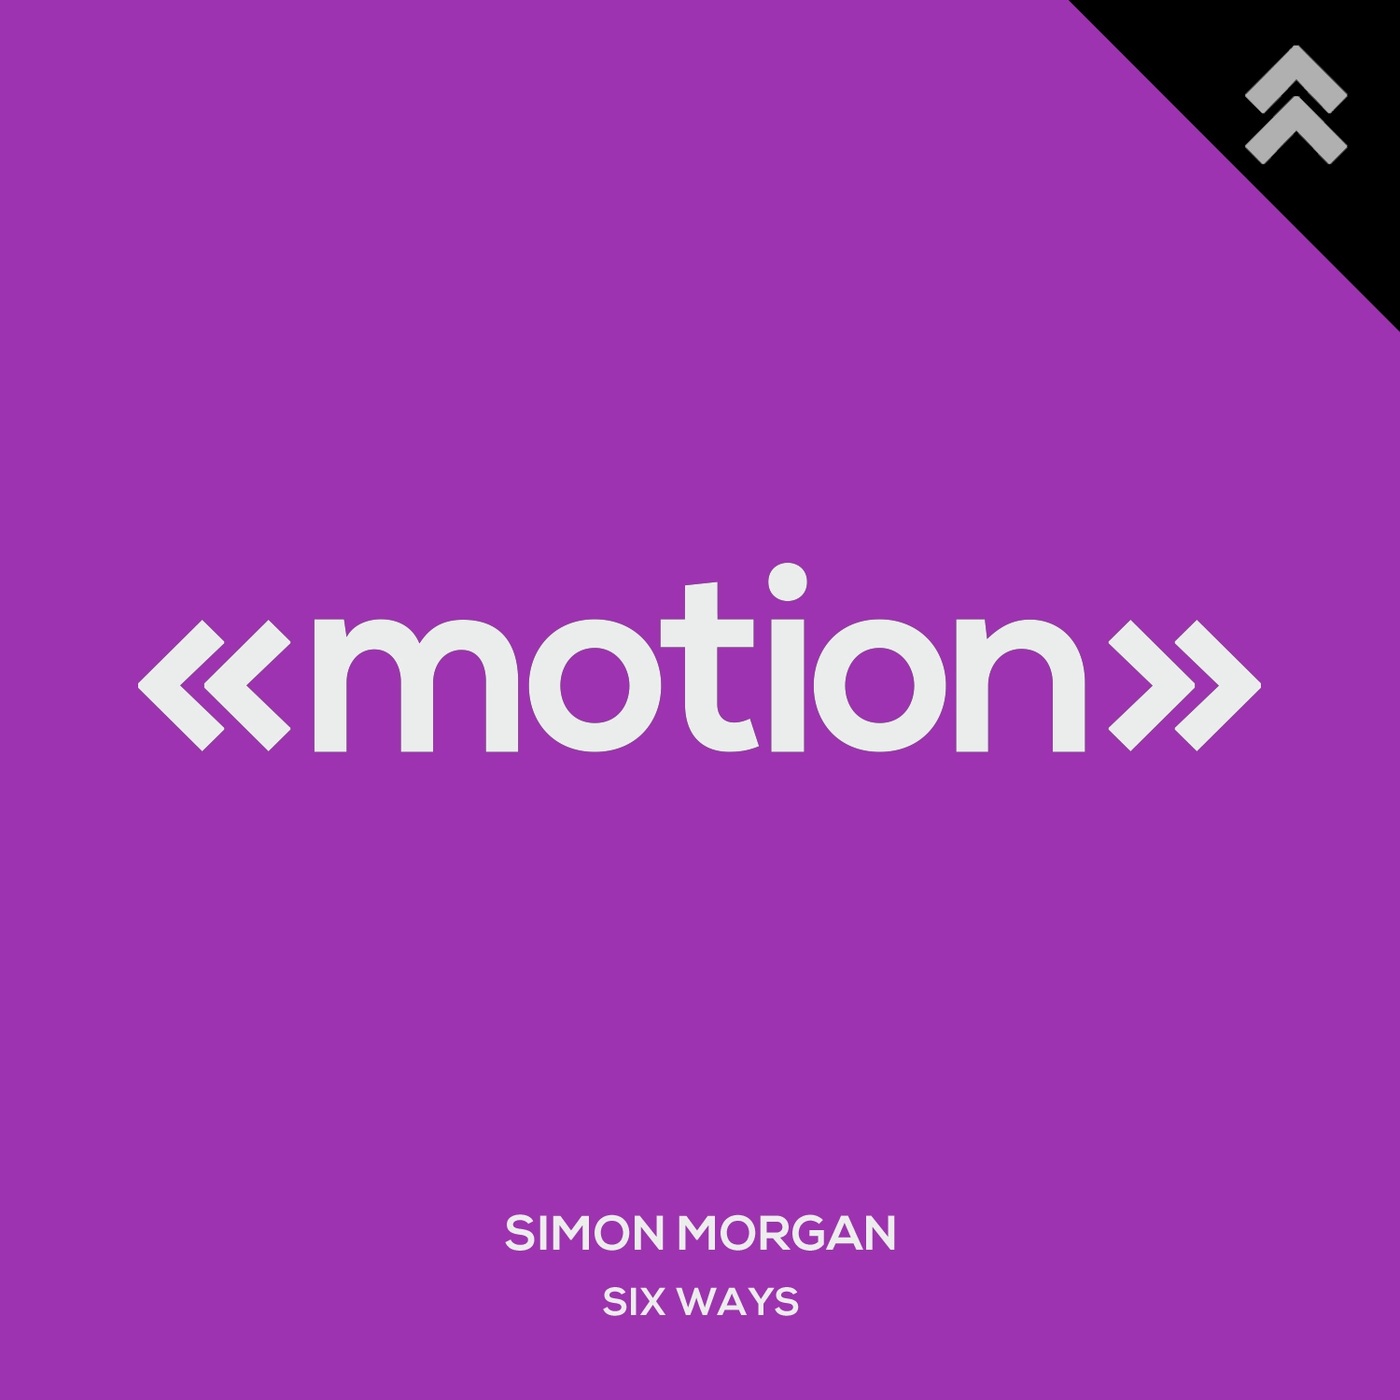 Simon Morgan - Six Ways / motion